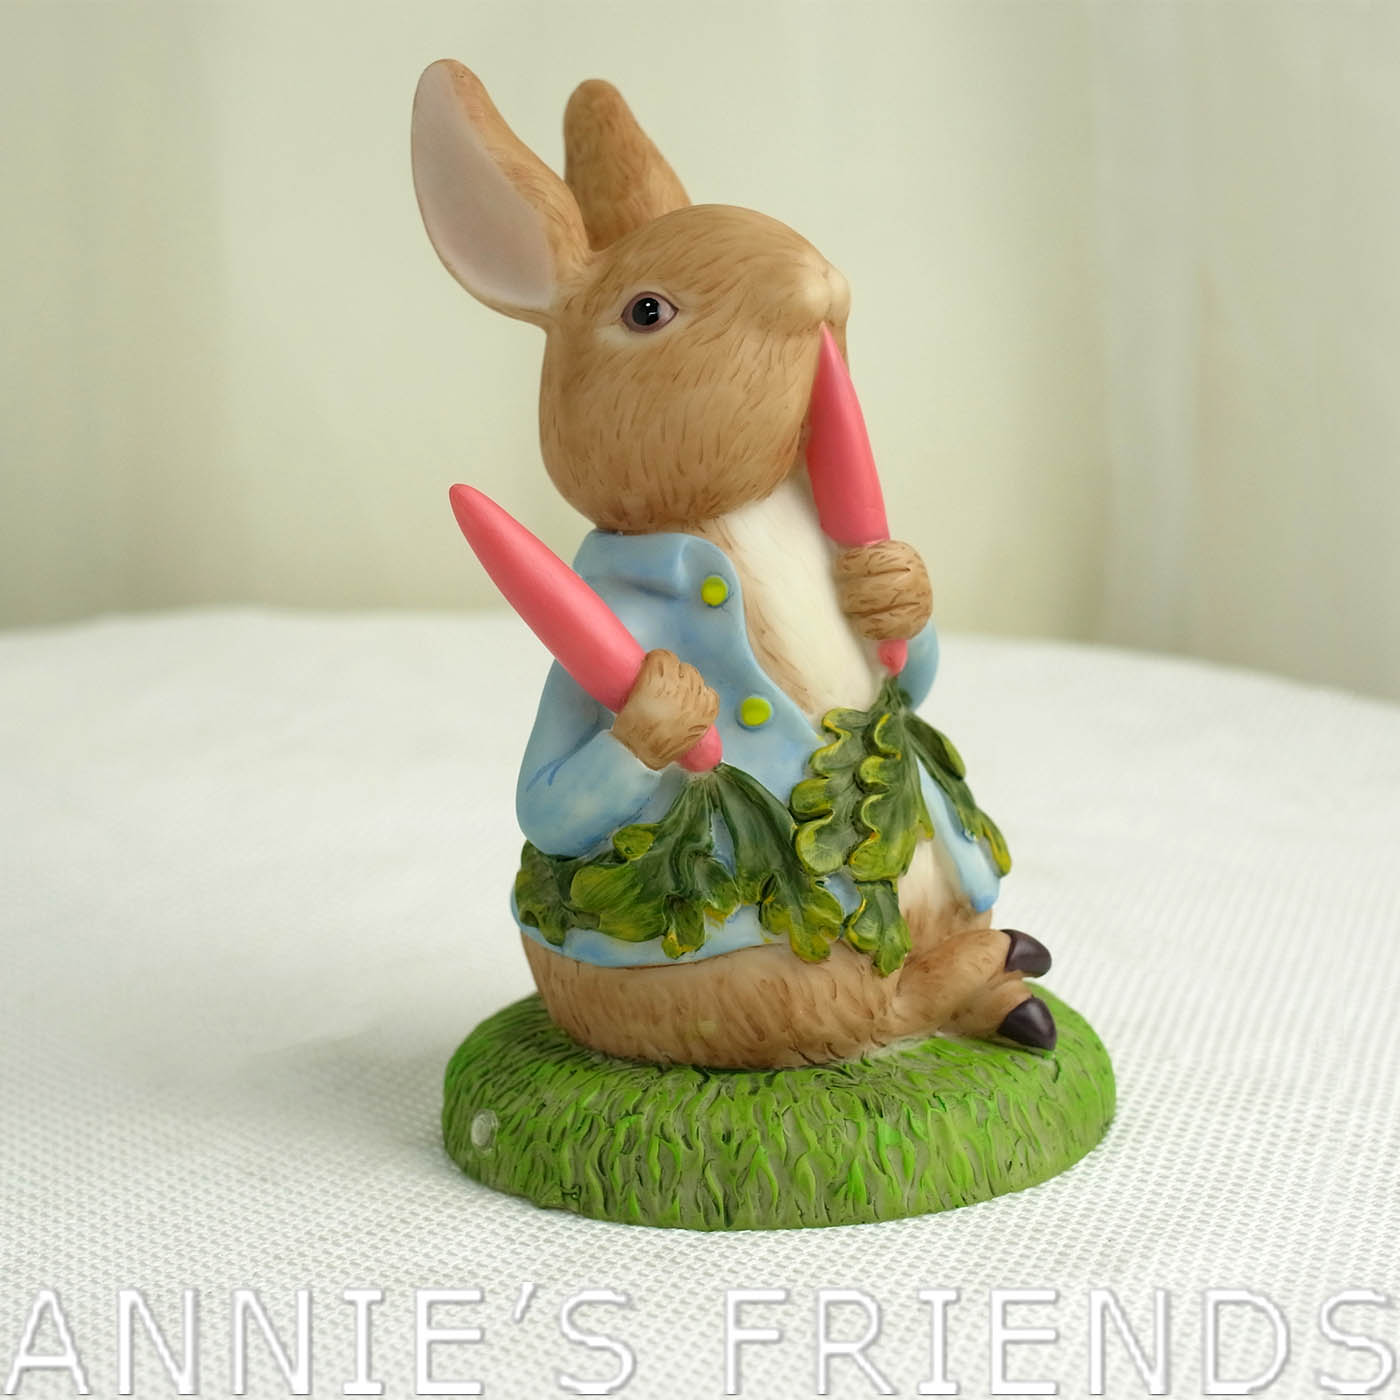 AnniesFriends 彼得兔 Peter Rabbit攜帶式 LED 小夜燈 檯燈 溫馨風 精品 禮品 生日禮物